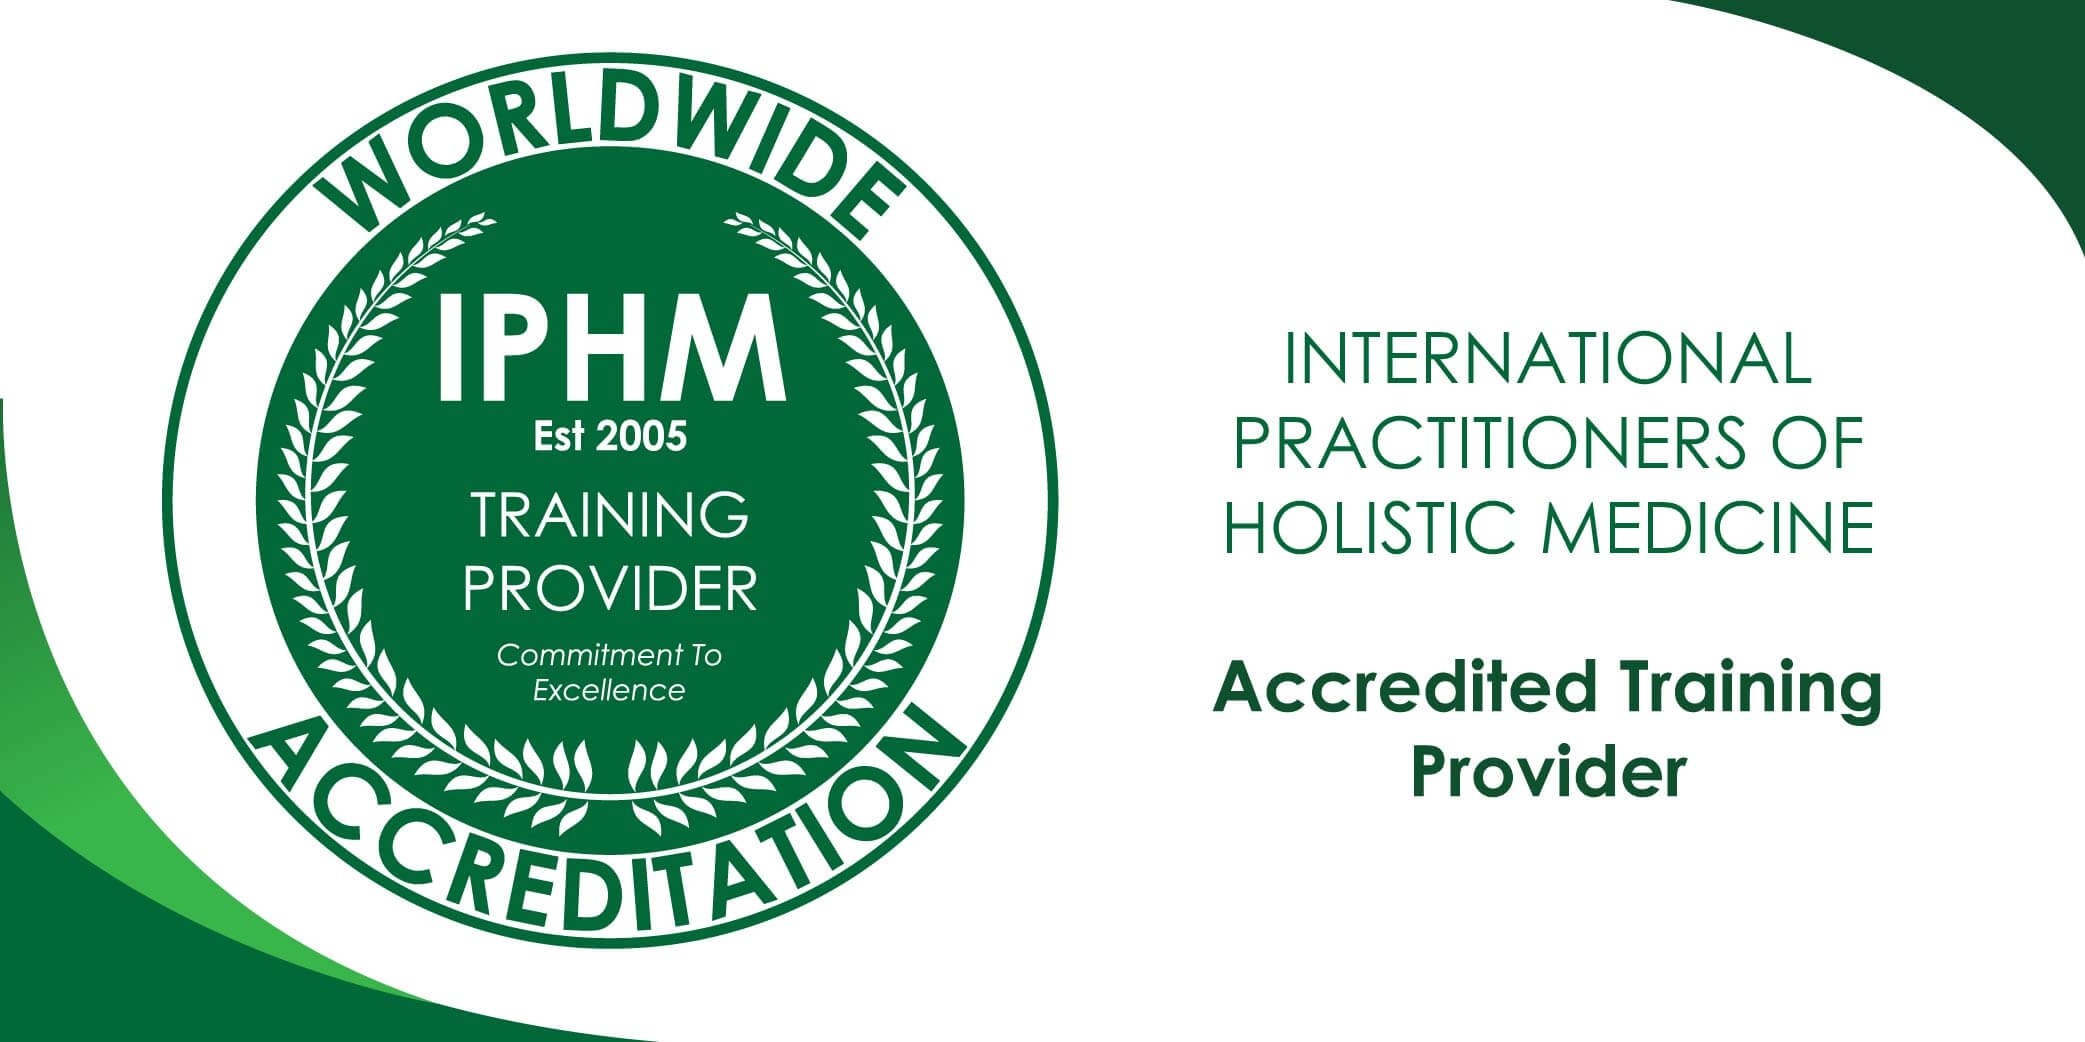 accredited training provider.jpg